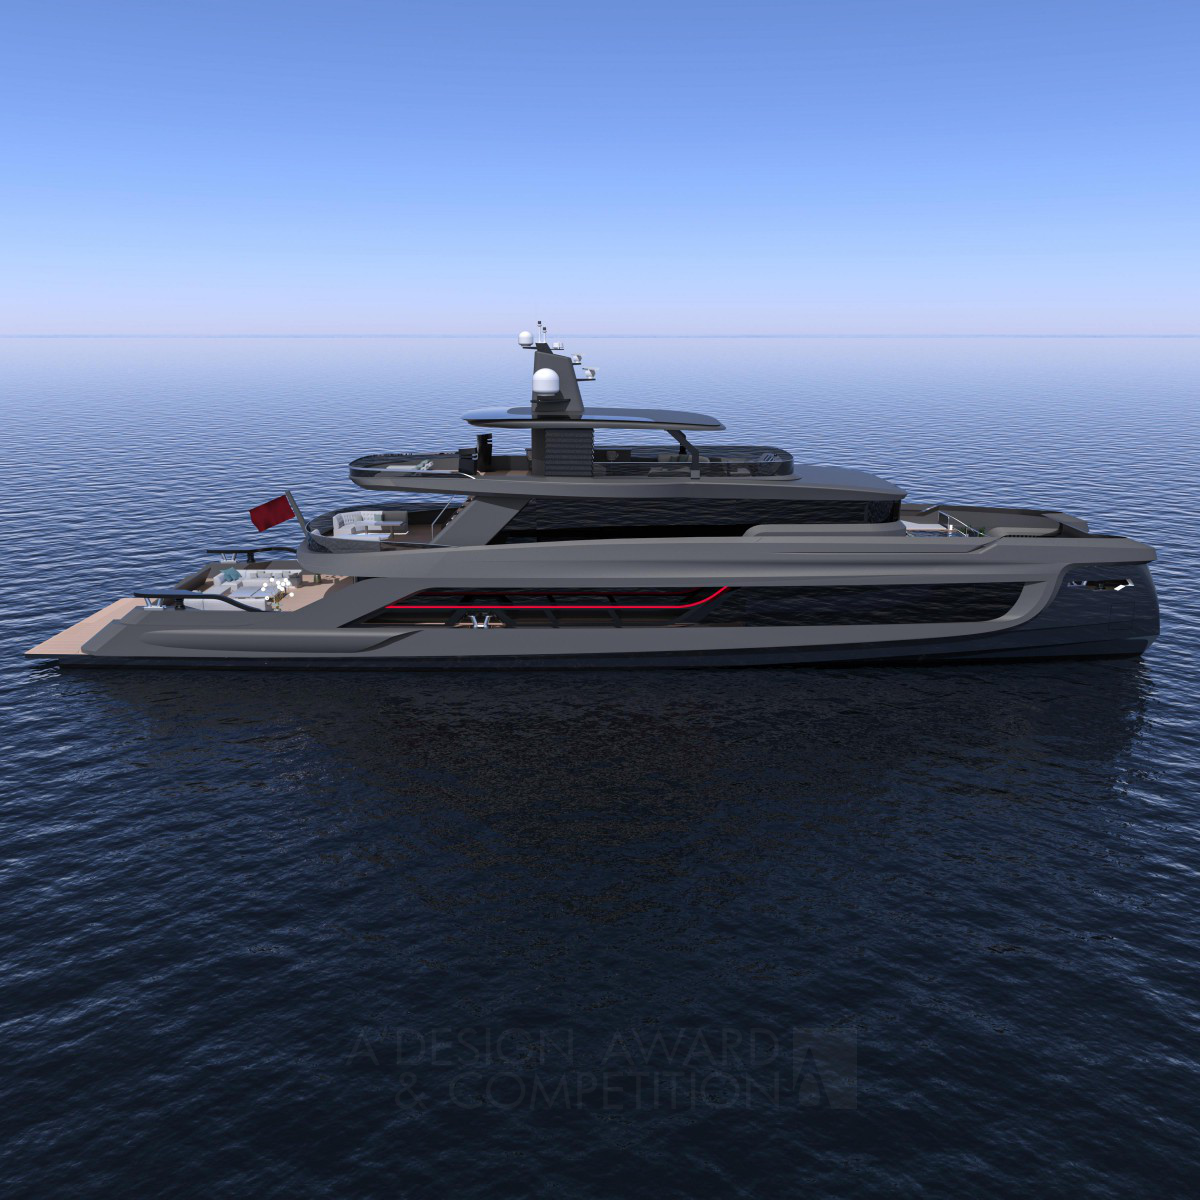 ALPEREN ASLAN wins Iron at the prestigious A' Yacht and Marine Vessels Design Award with Ursa Catamaran Yacht.